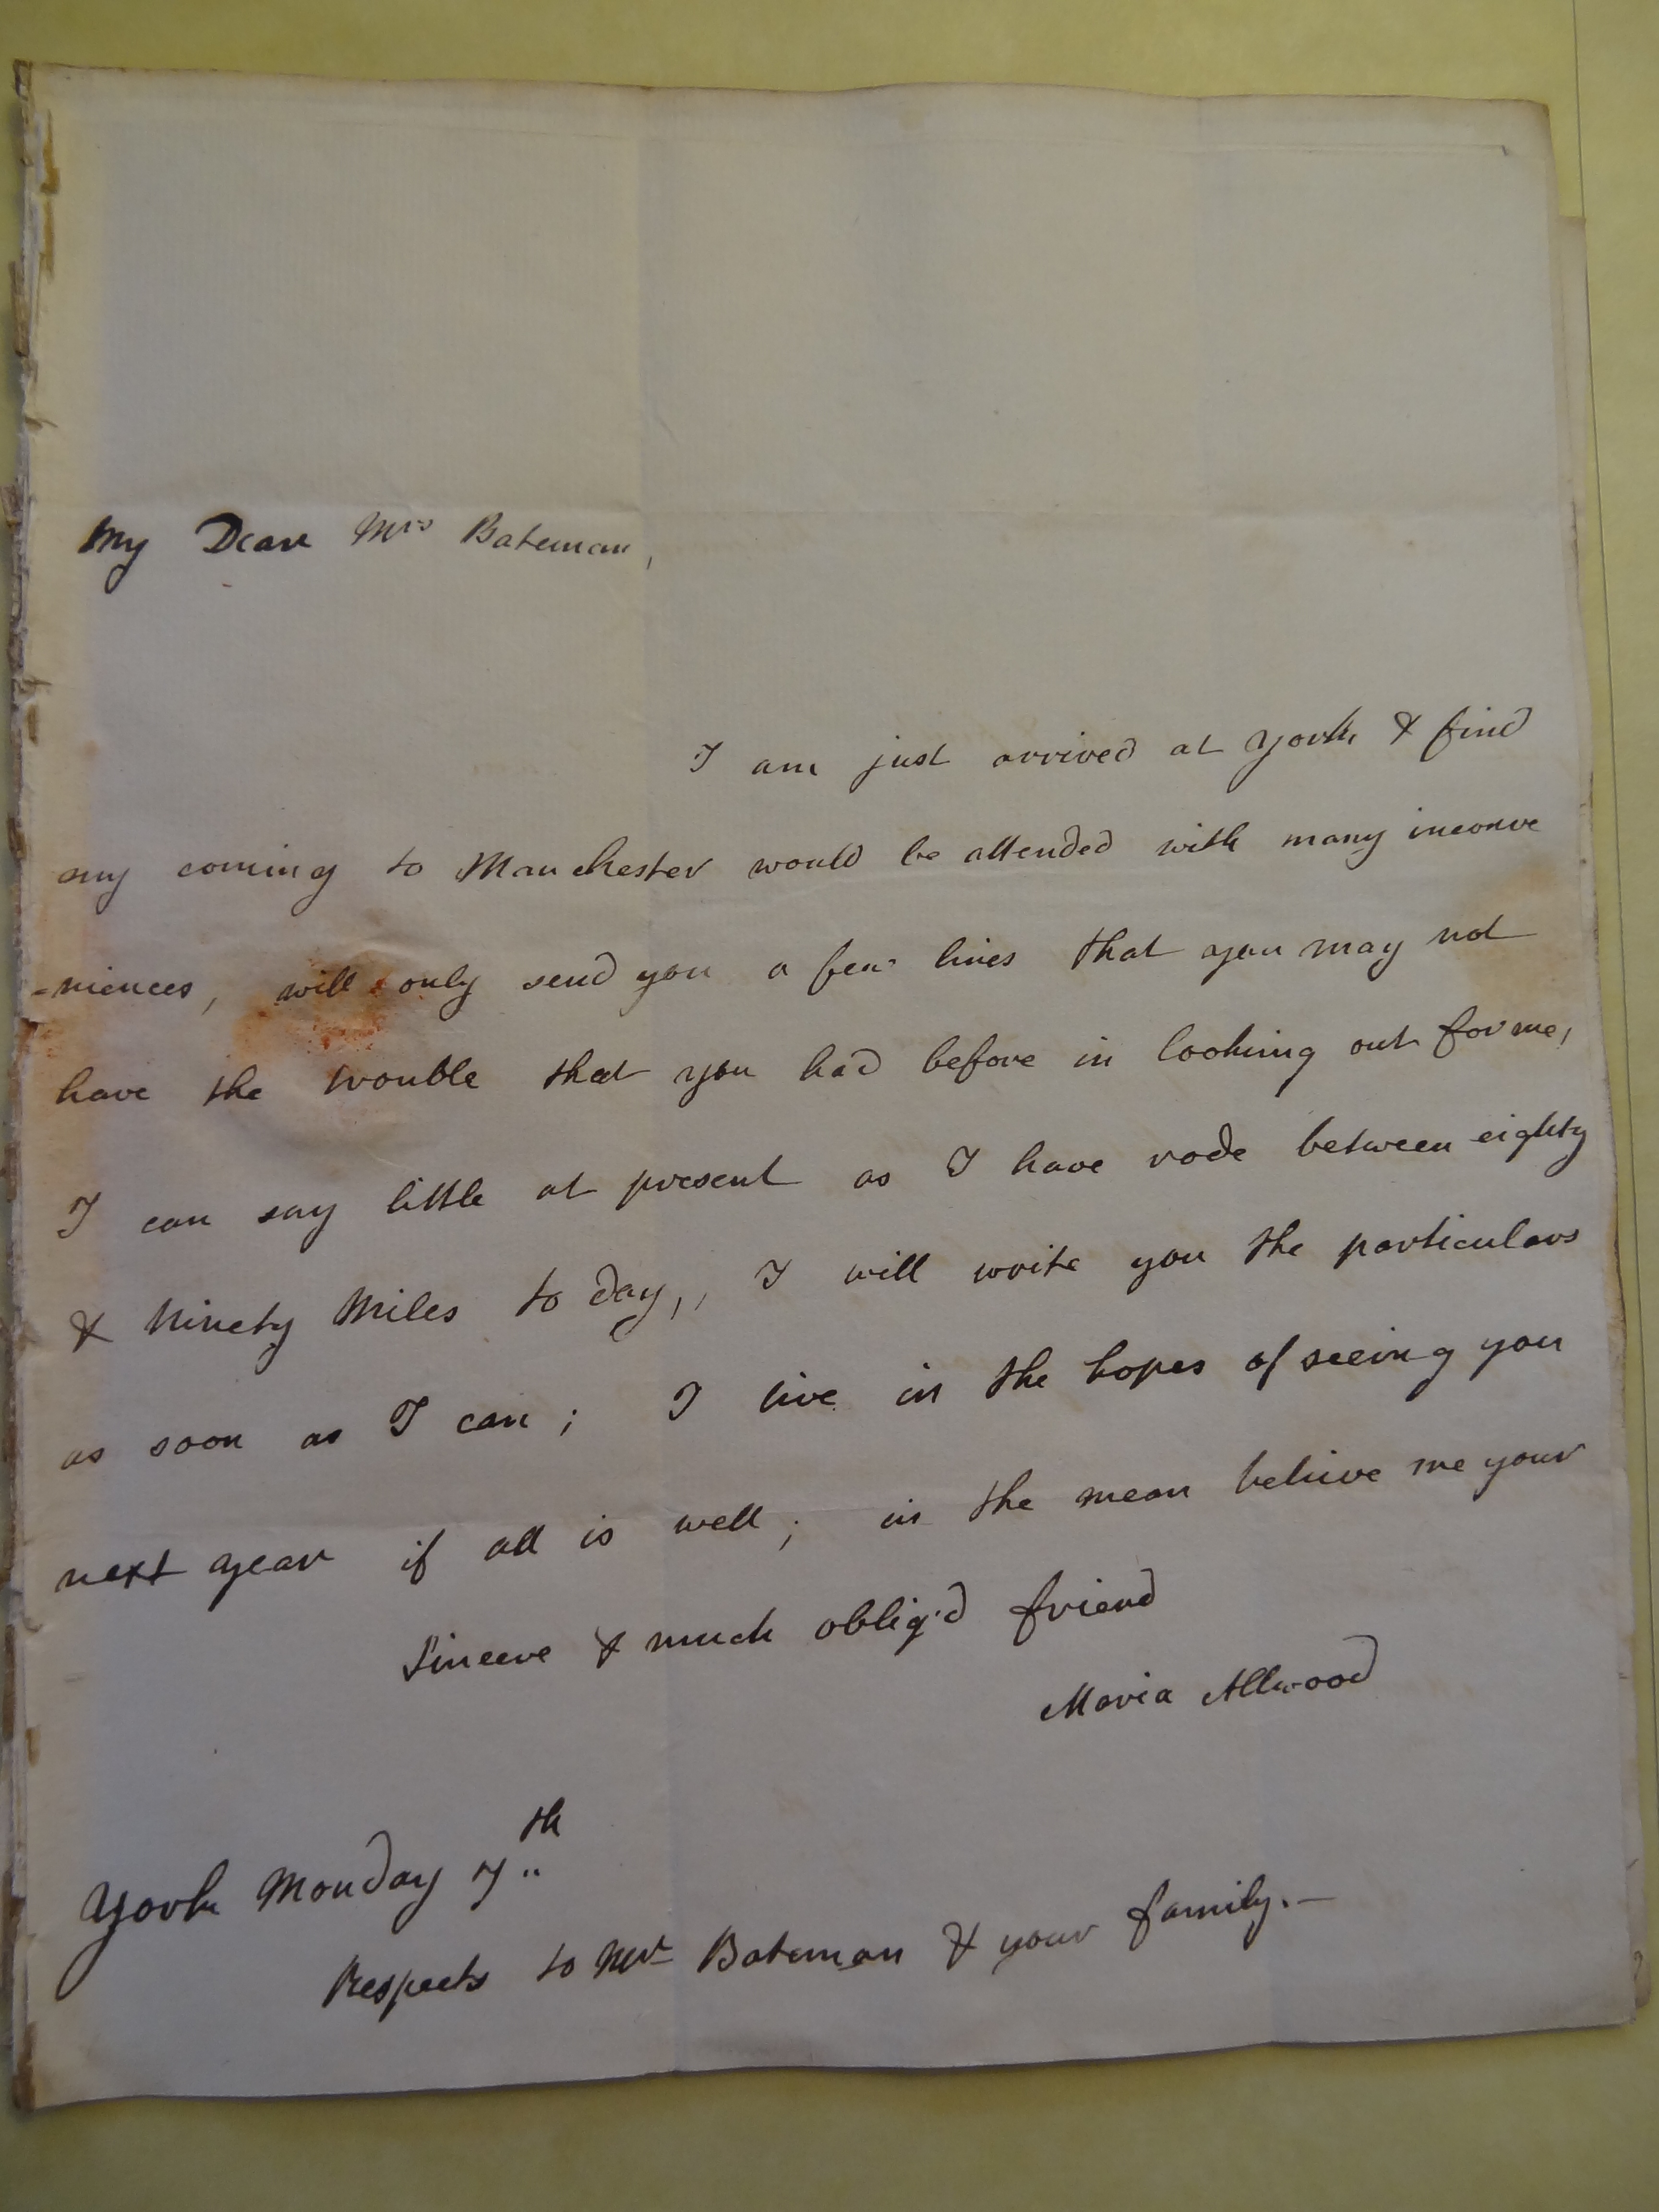 Image #1 of letter: Anna Allwood to Rebekah Bateman, 7th undated